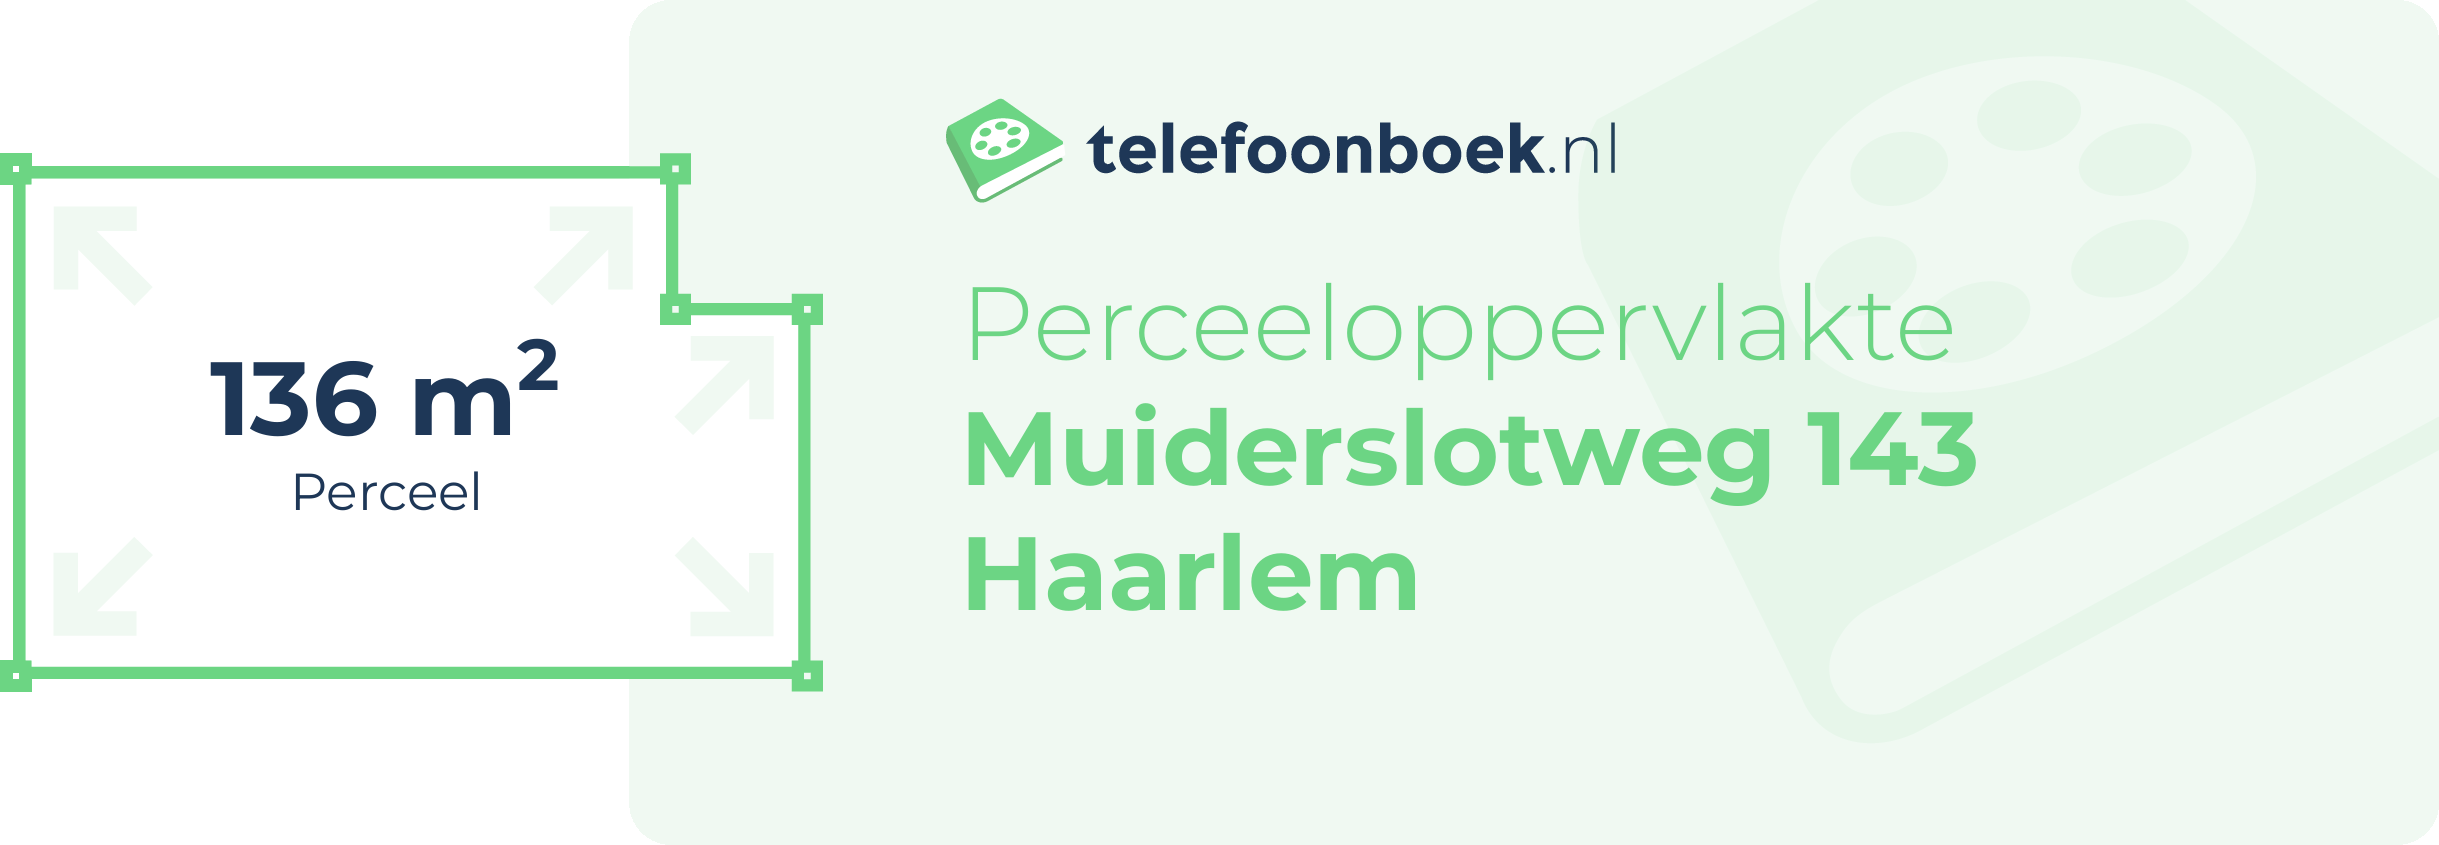 Perceeloppervlakte Muiderslotweg 143 Haarlem